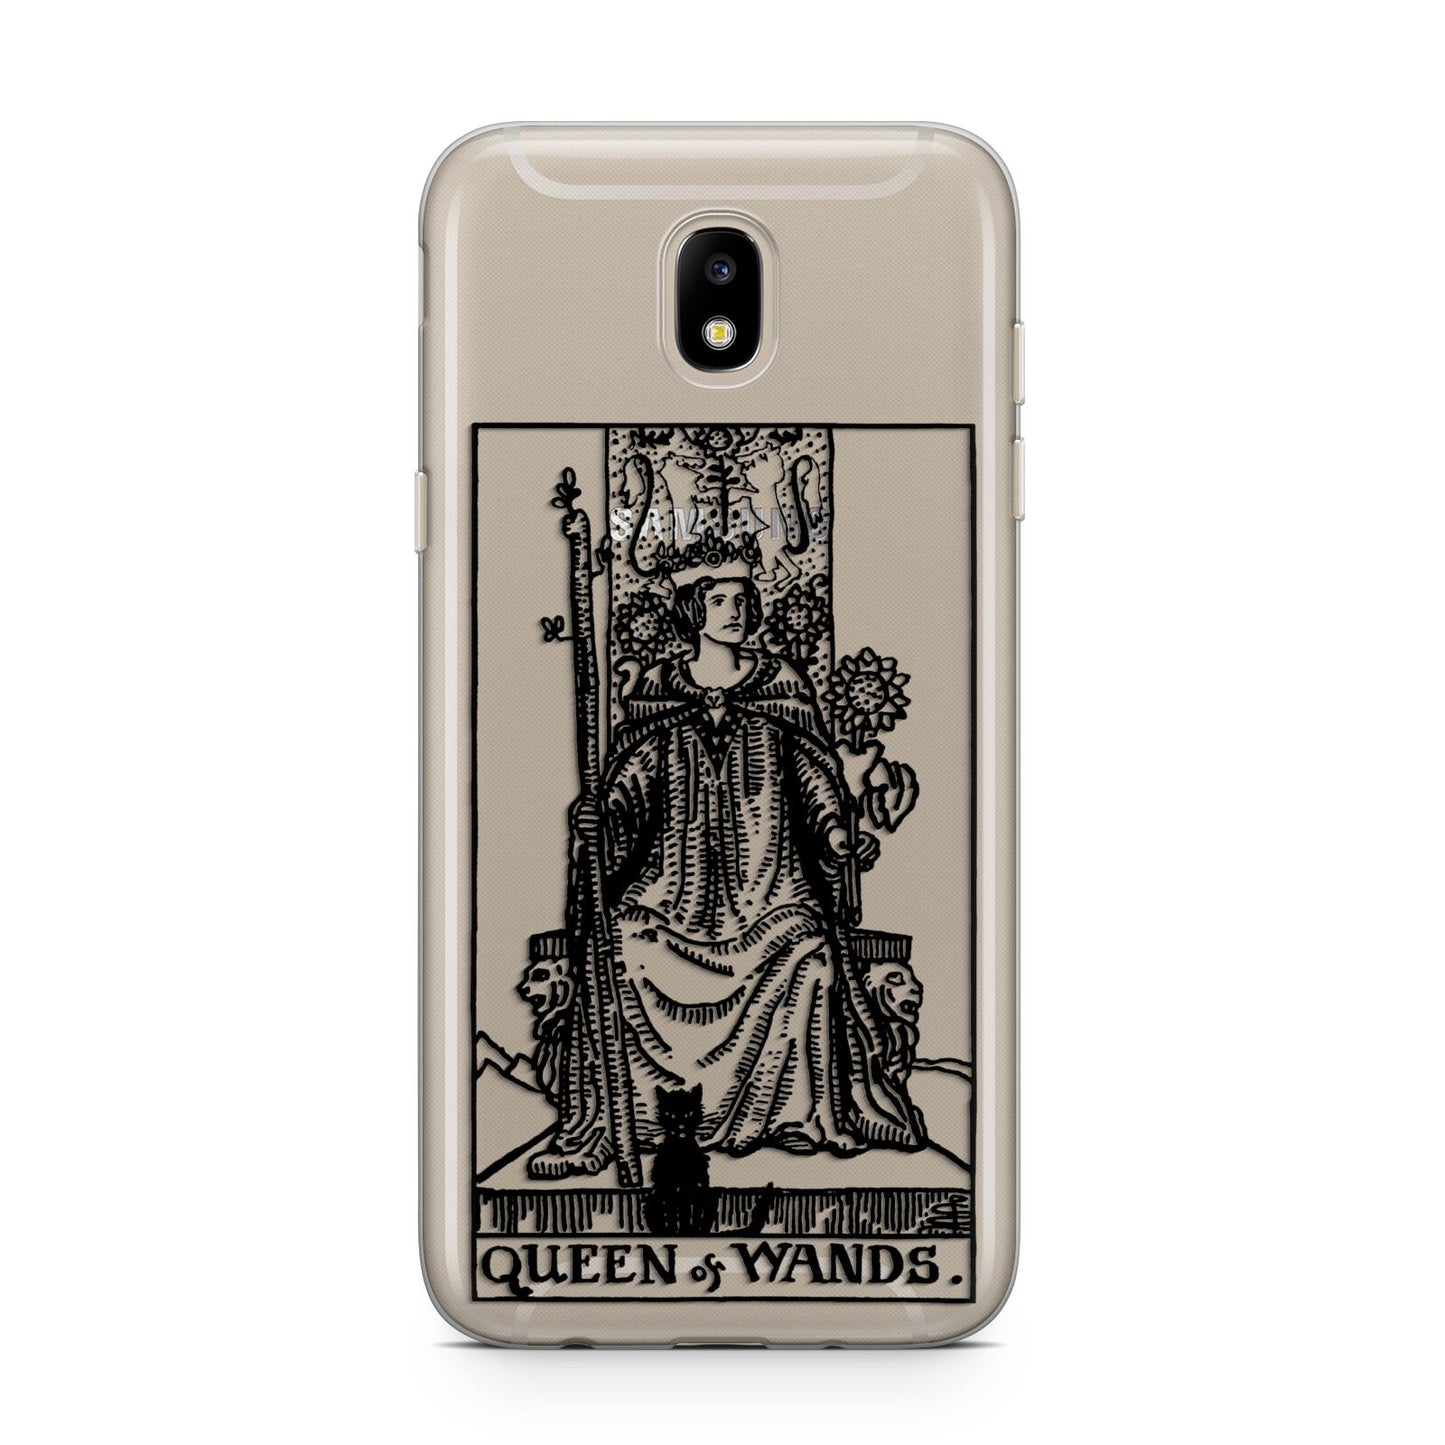 Queen of Wands Monochrome Samsung J5 2017 Case